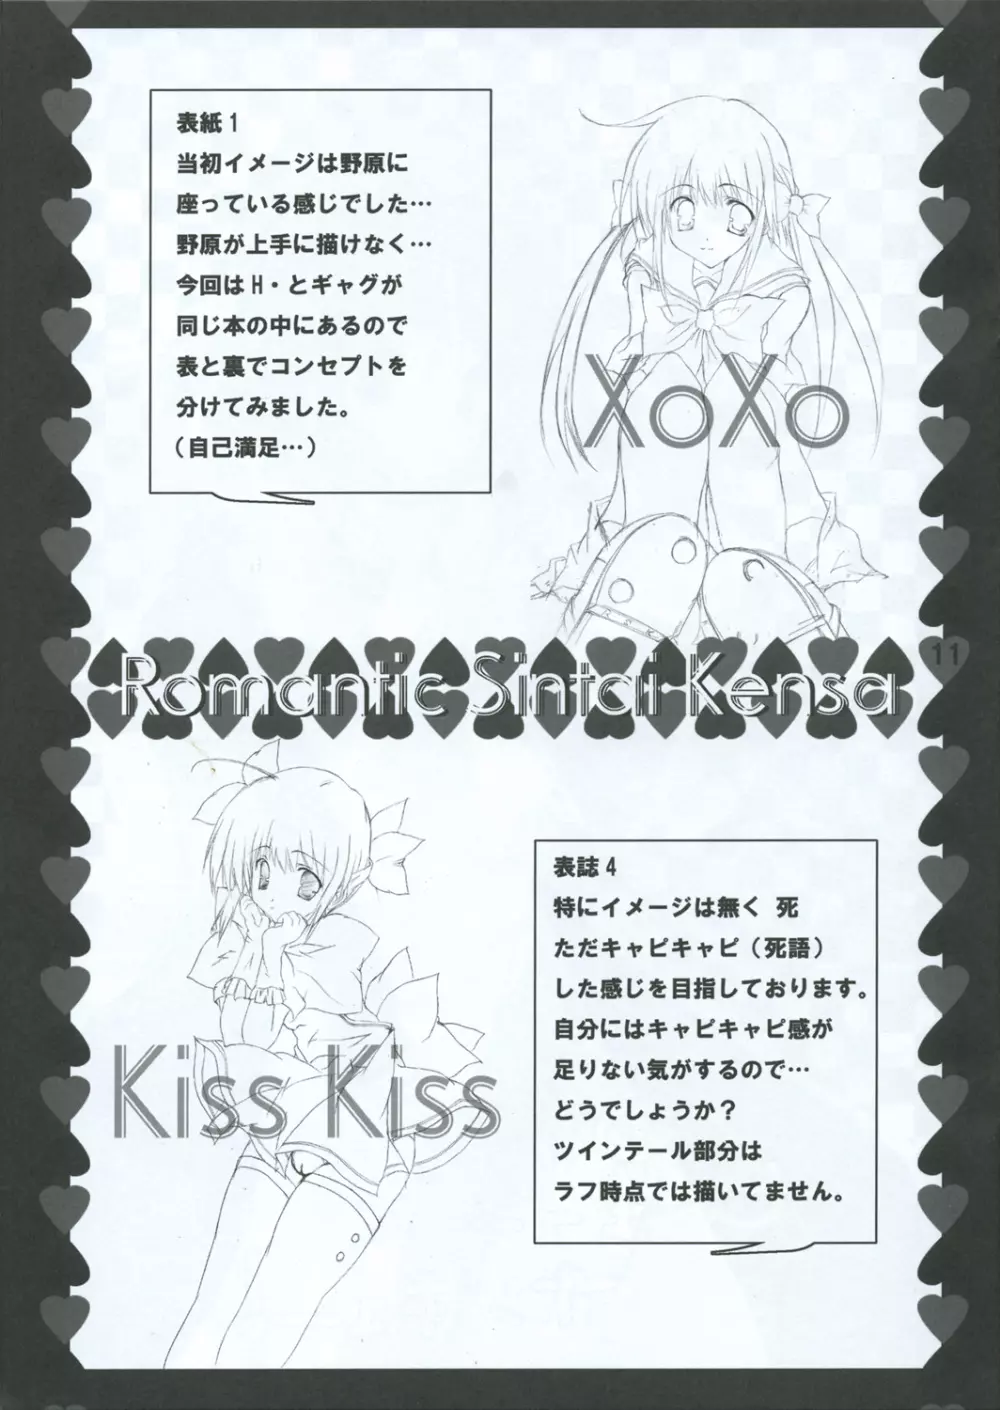 XoXo/kiss kiss - page11